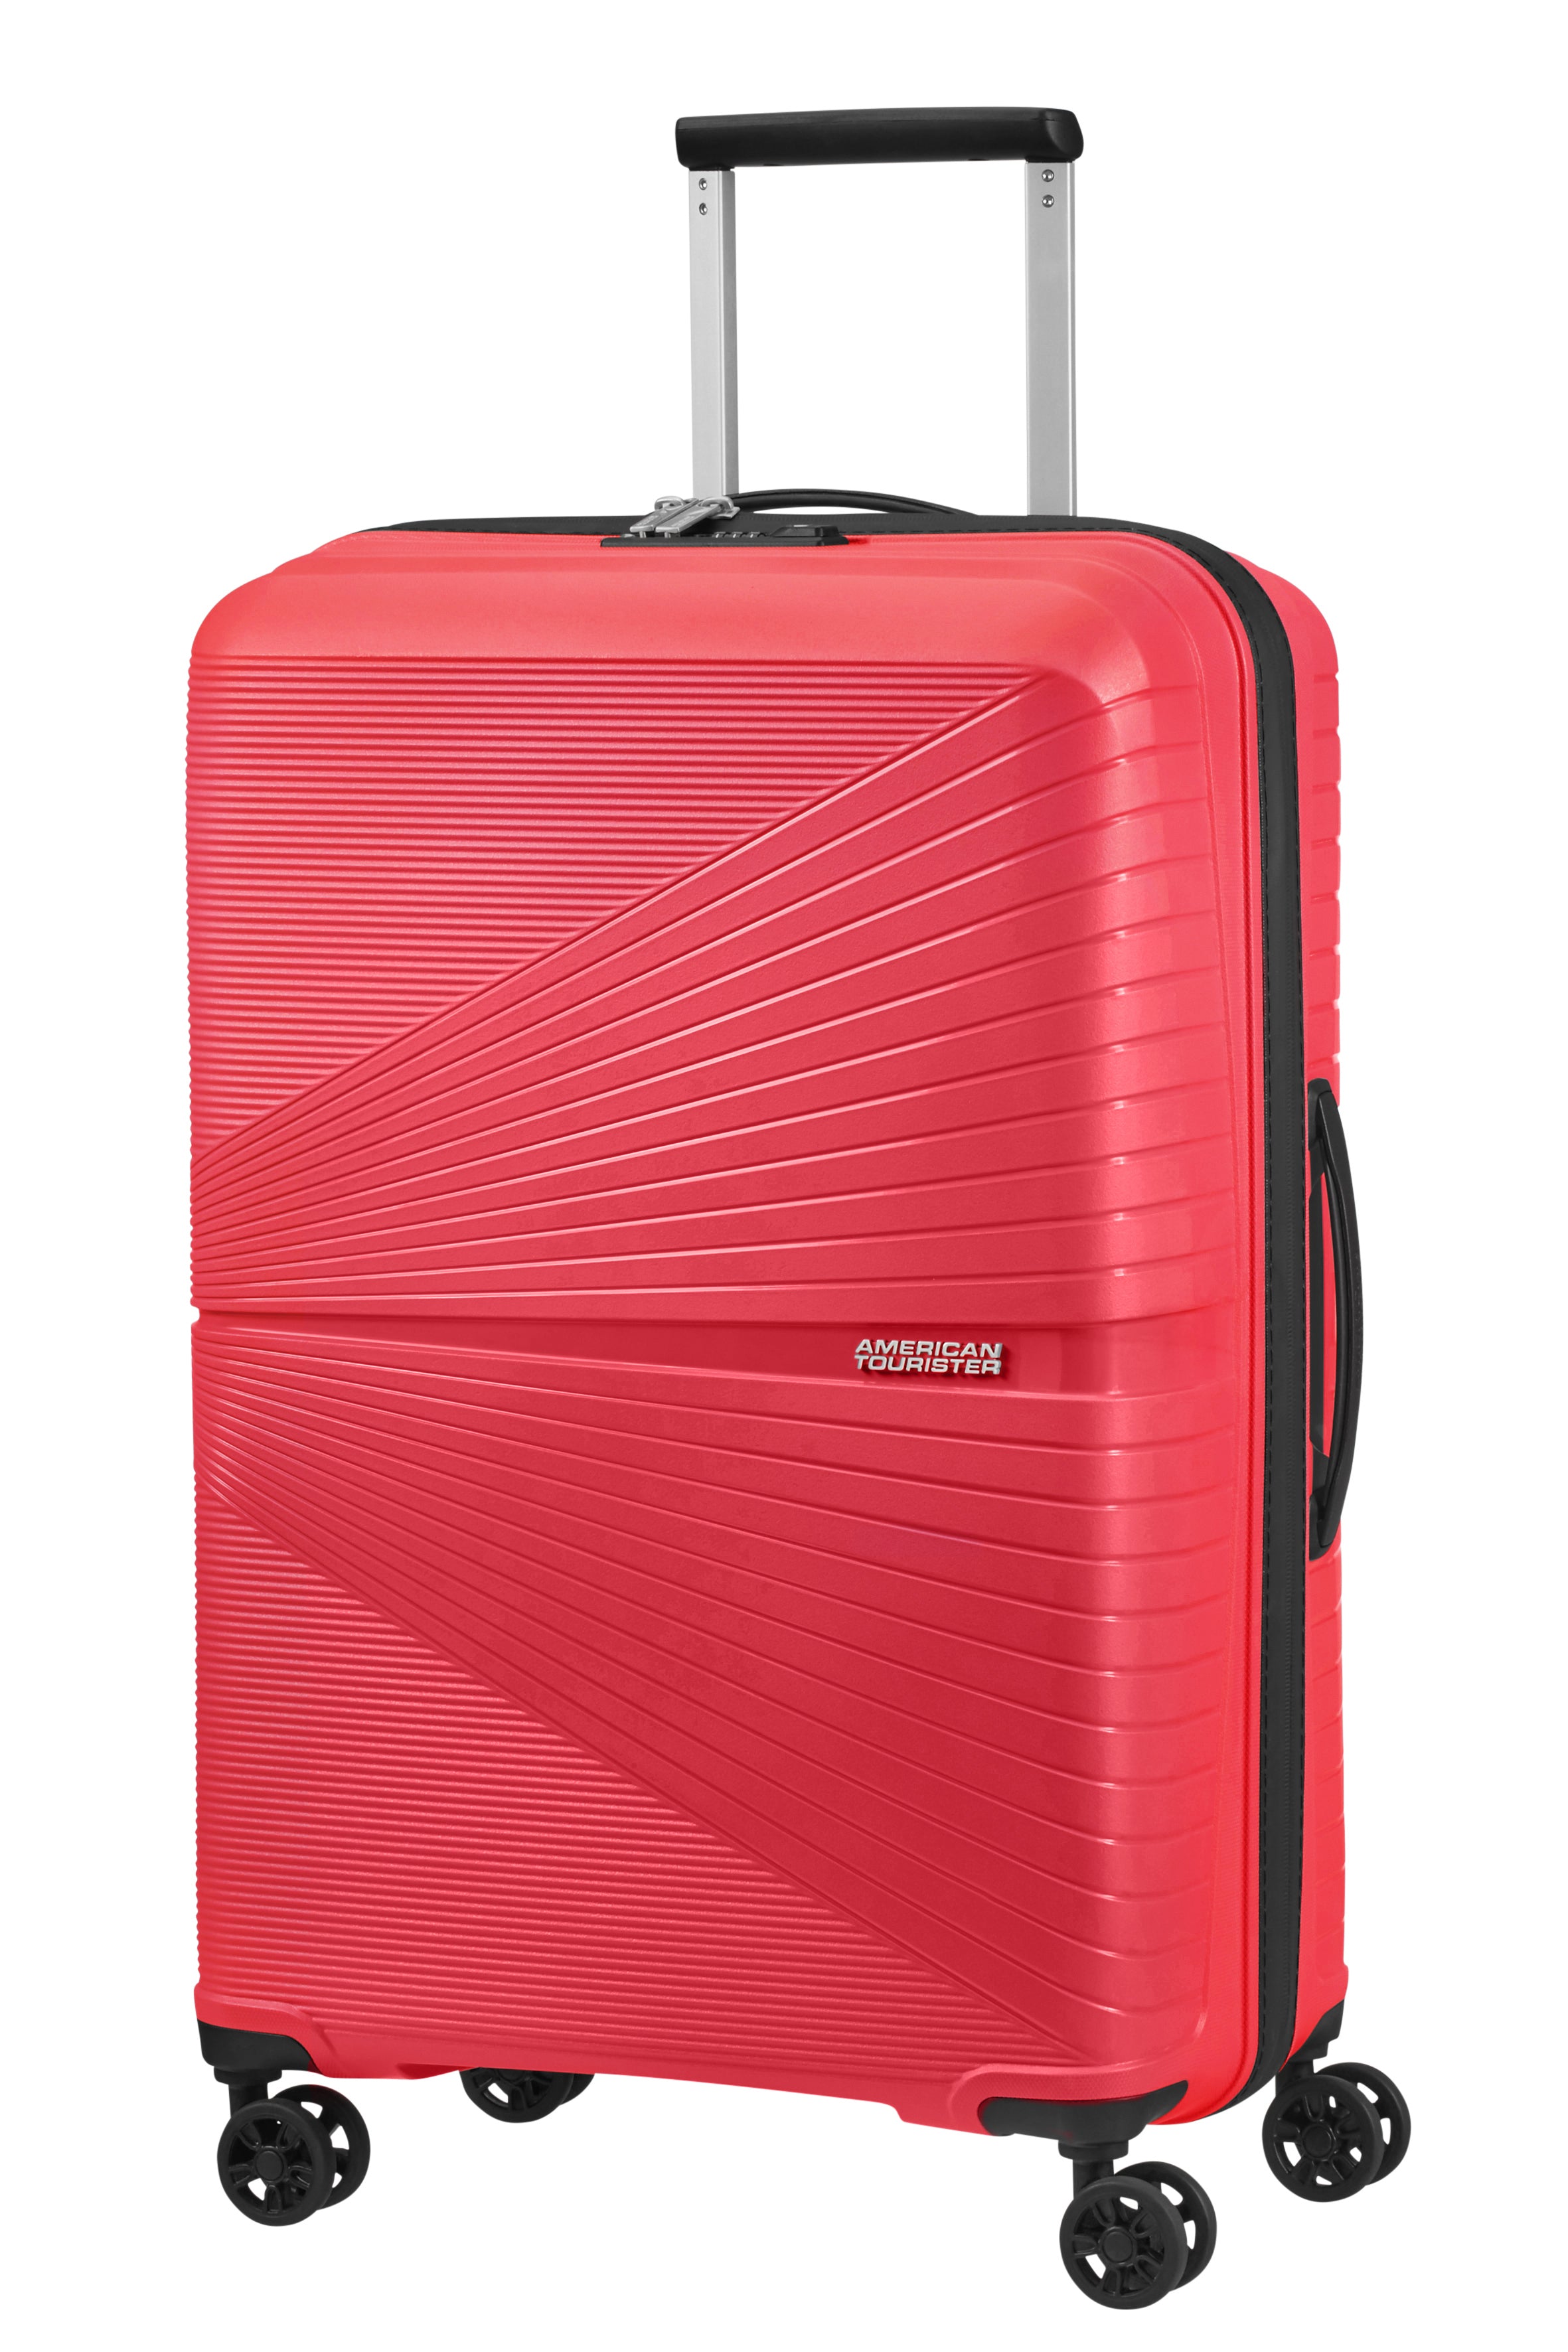 American Tourister - Airconic 67cm Medium 4 Wheel Hard Suitcase - Paradise Pink-8